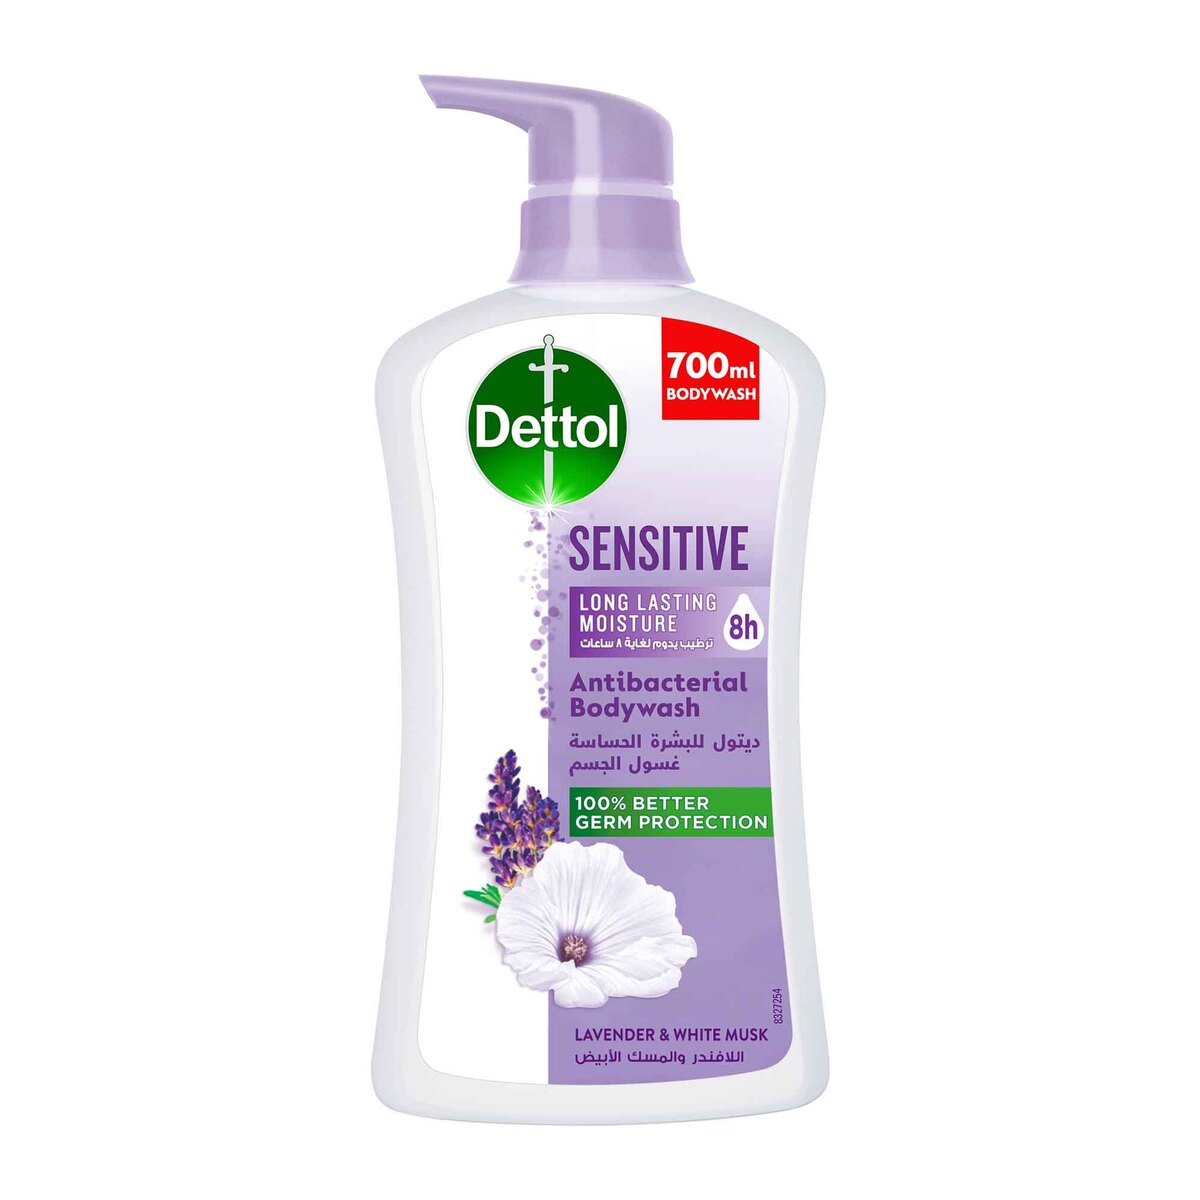 Dettol Sensitive Lavender & White Musk Antibacterial Bodywash 700 ml